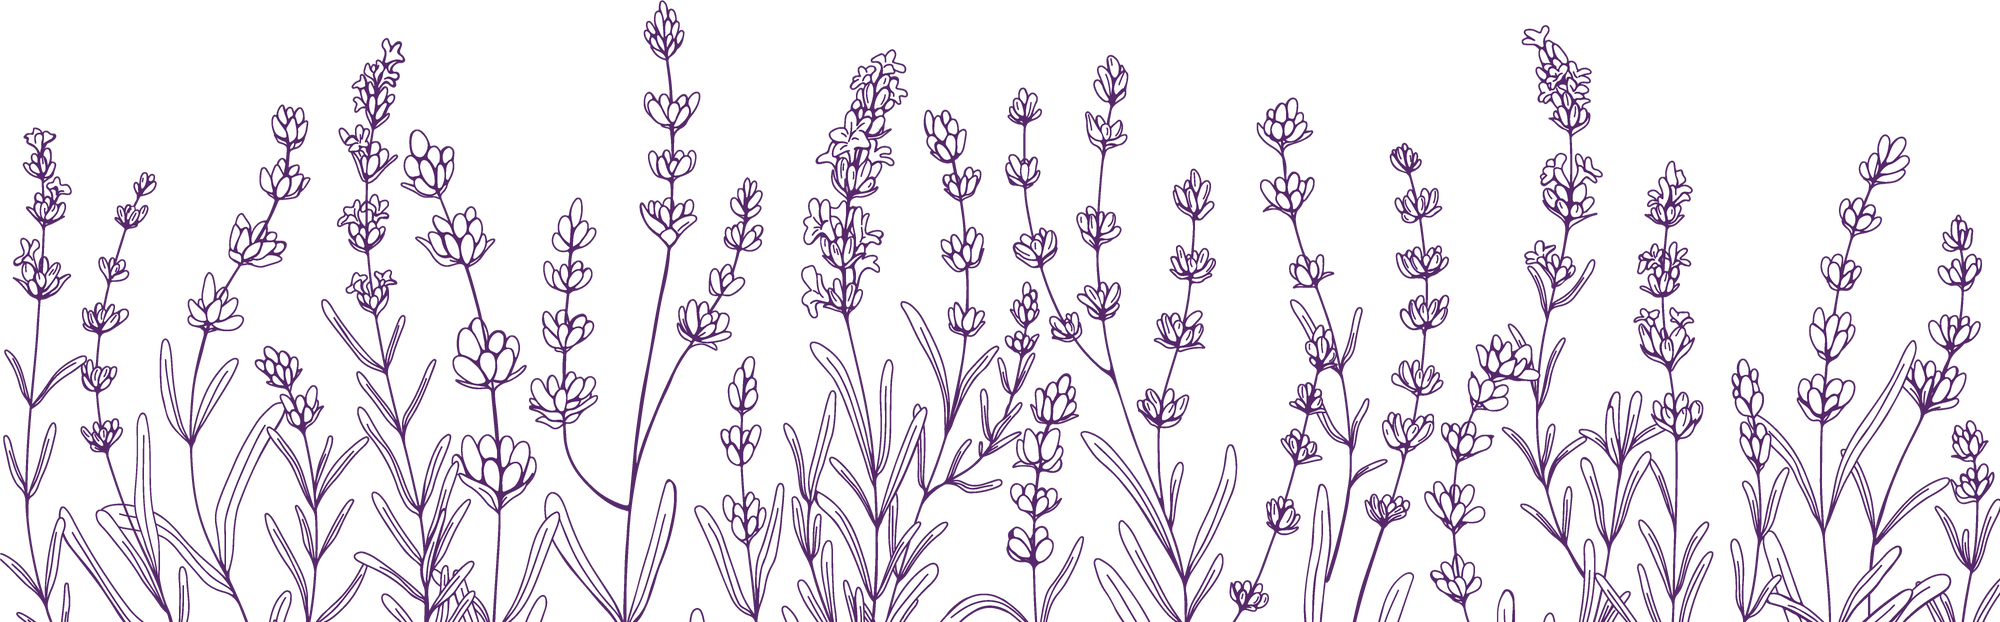 Hand Drawn Lavender Border